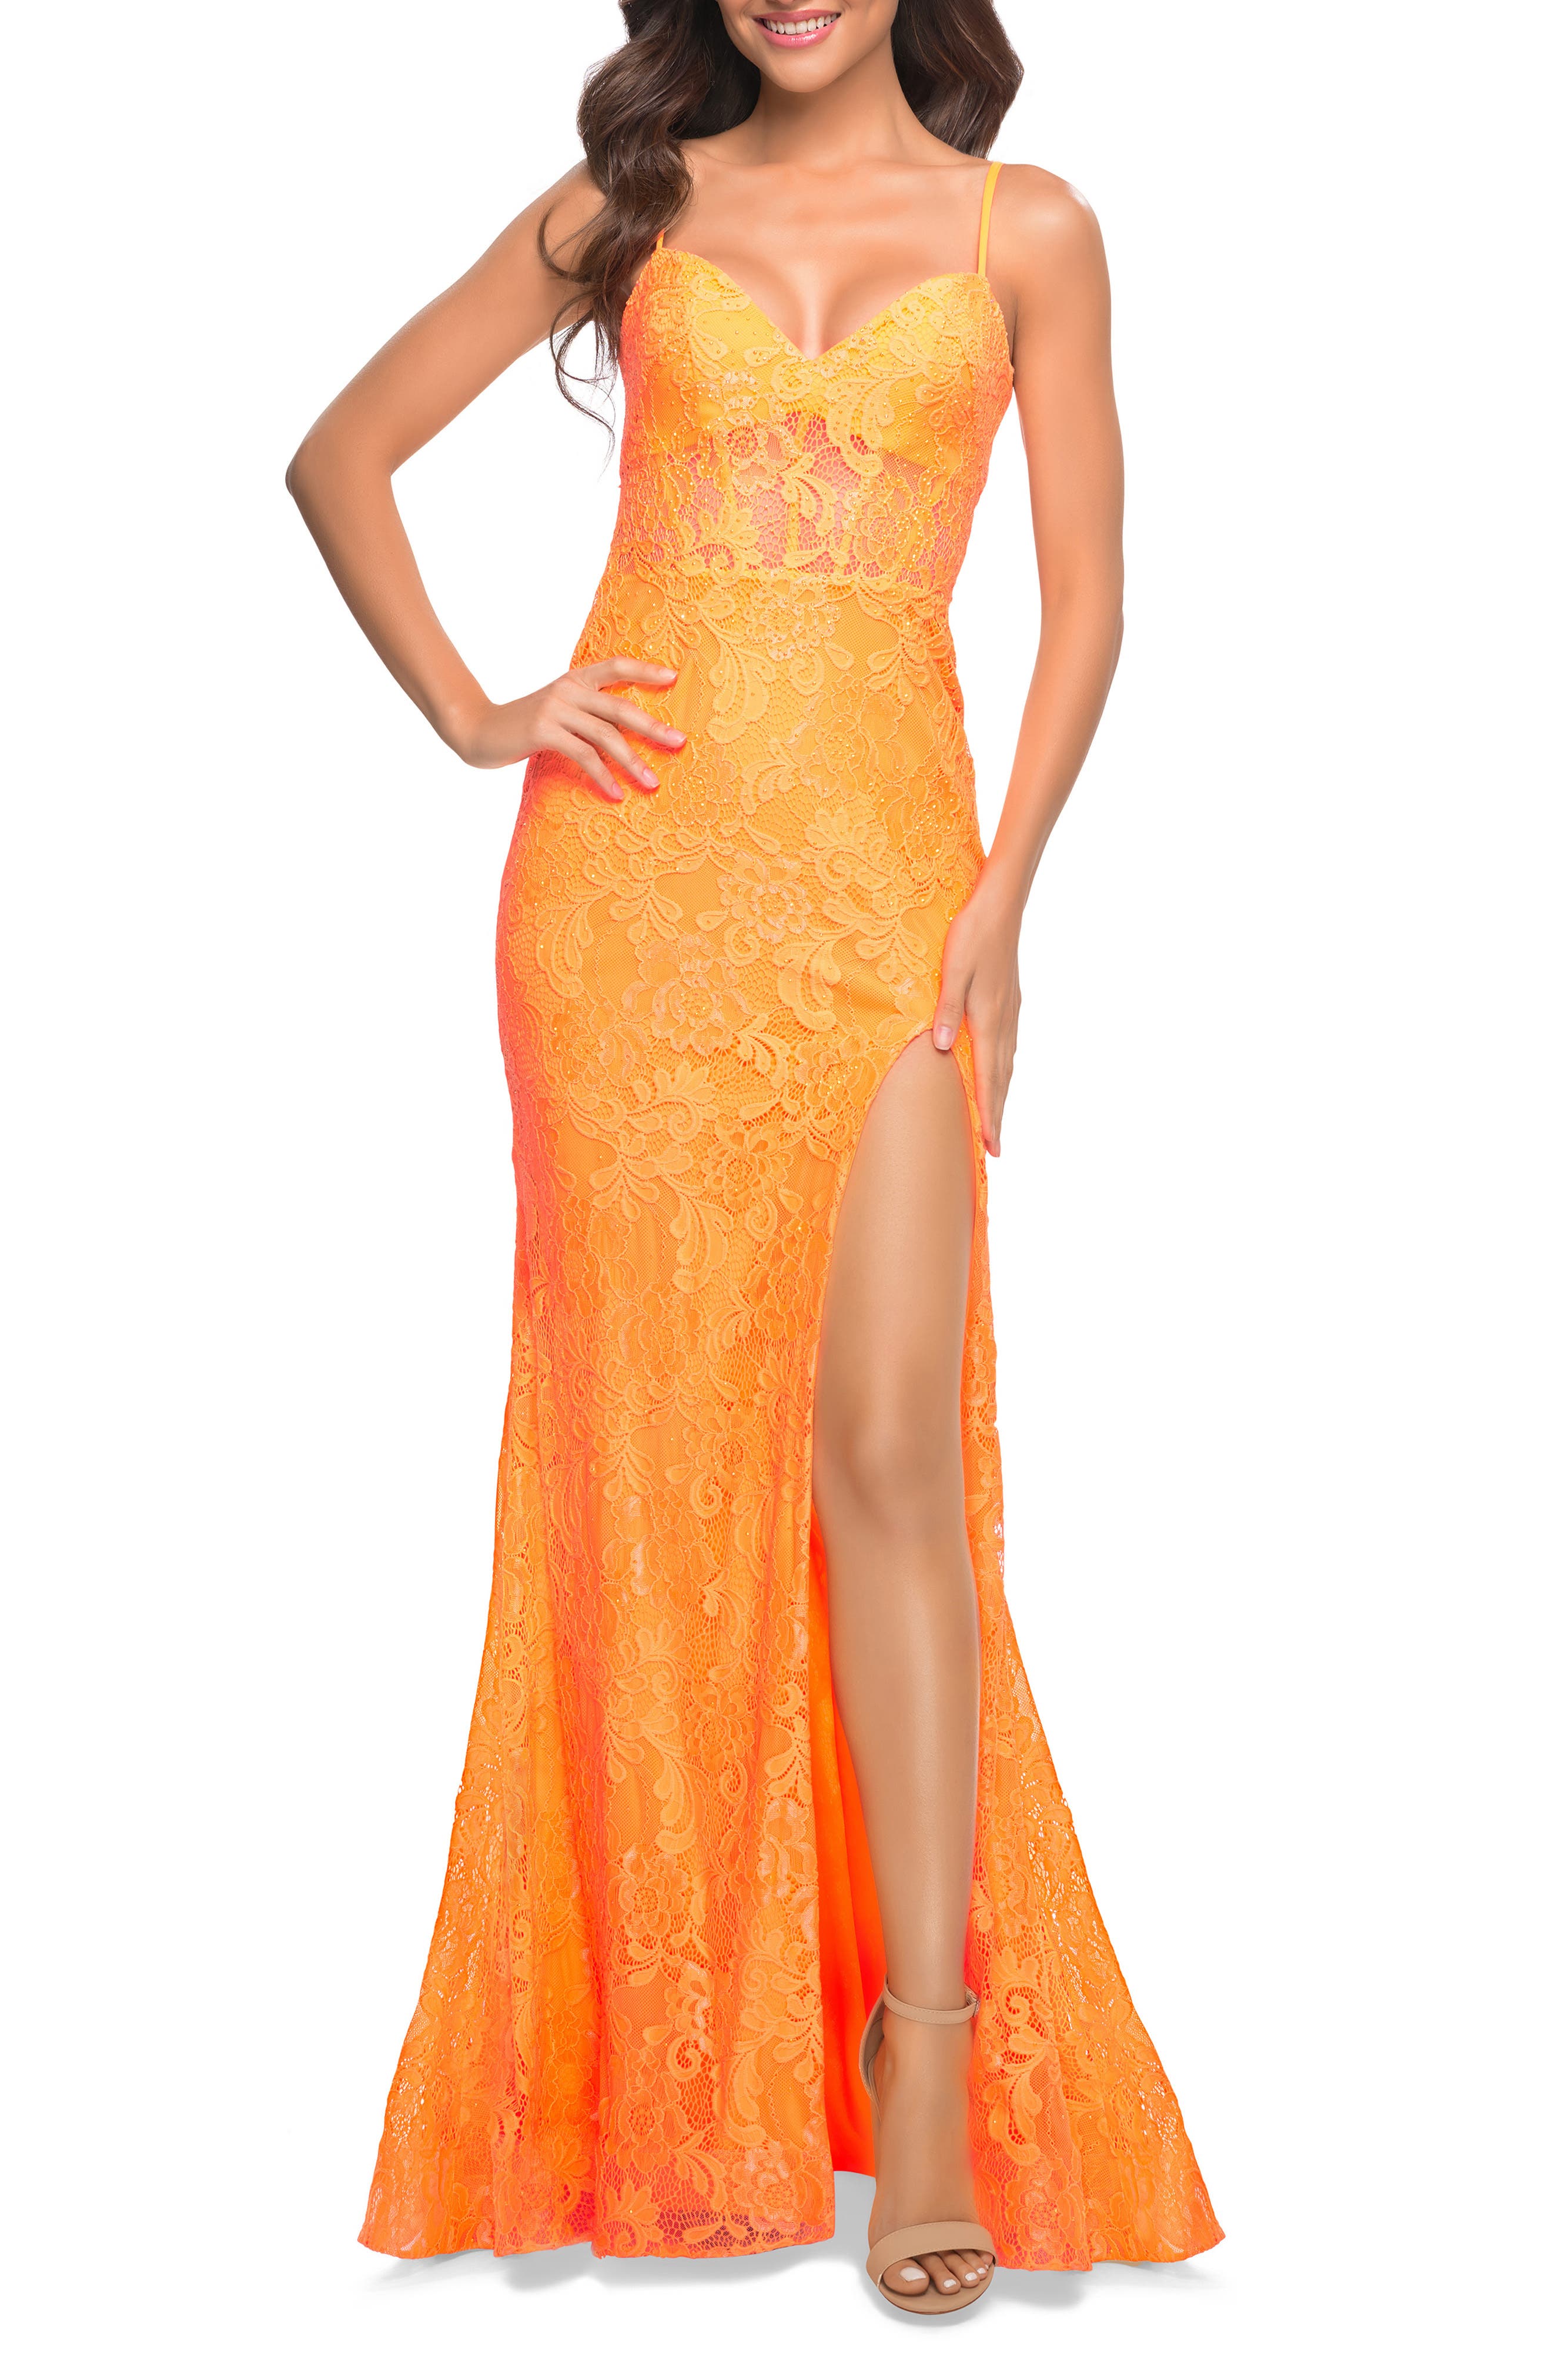 orange maxi dress for wedding